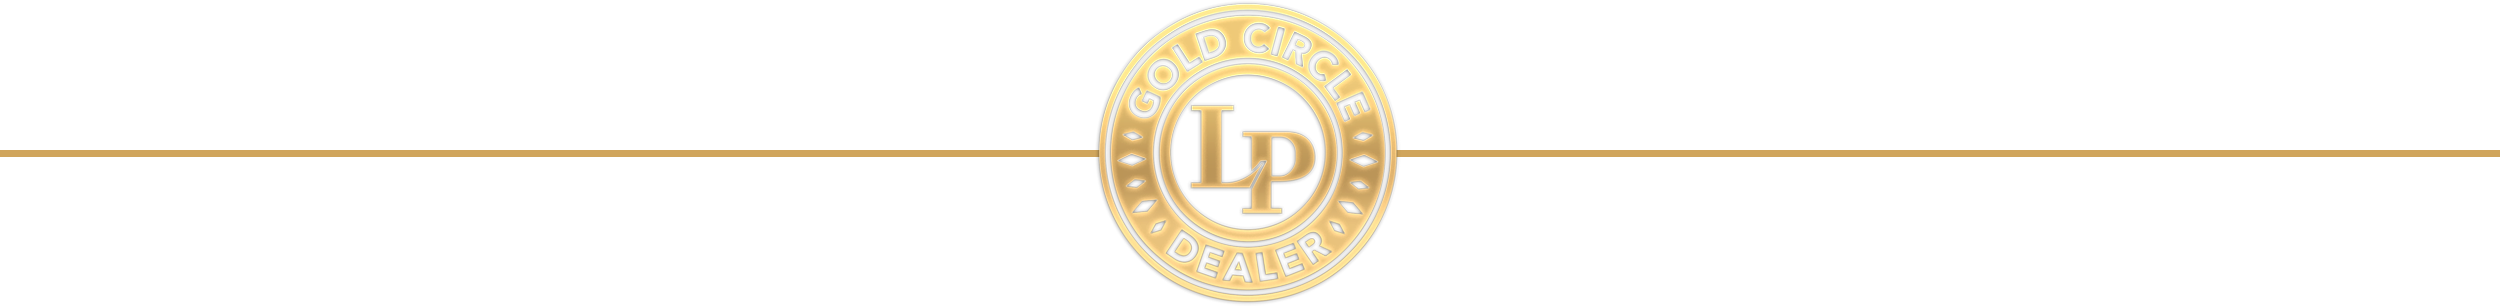 LP Gold Circle Dealers